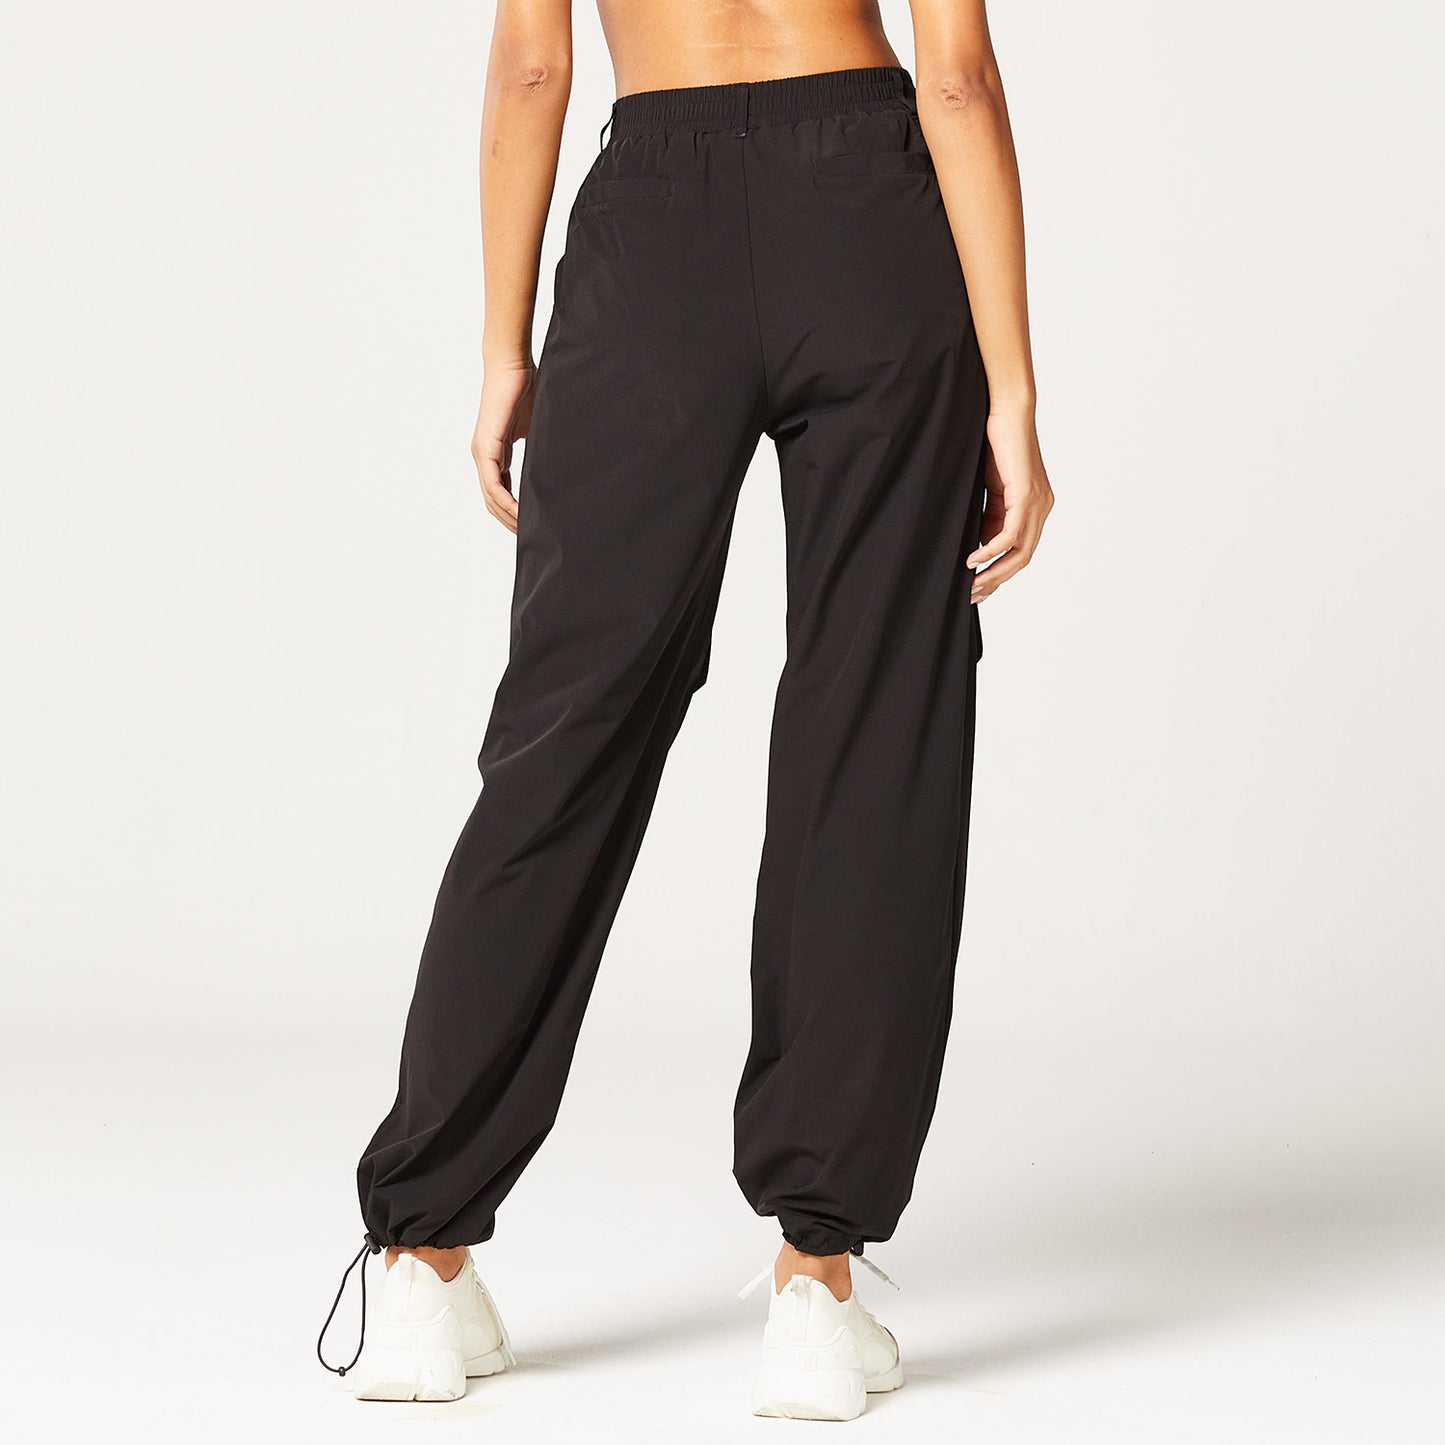 squatwolf-workout-clothes-code-cargo-pants-black-gym-pants-for-women